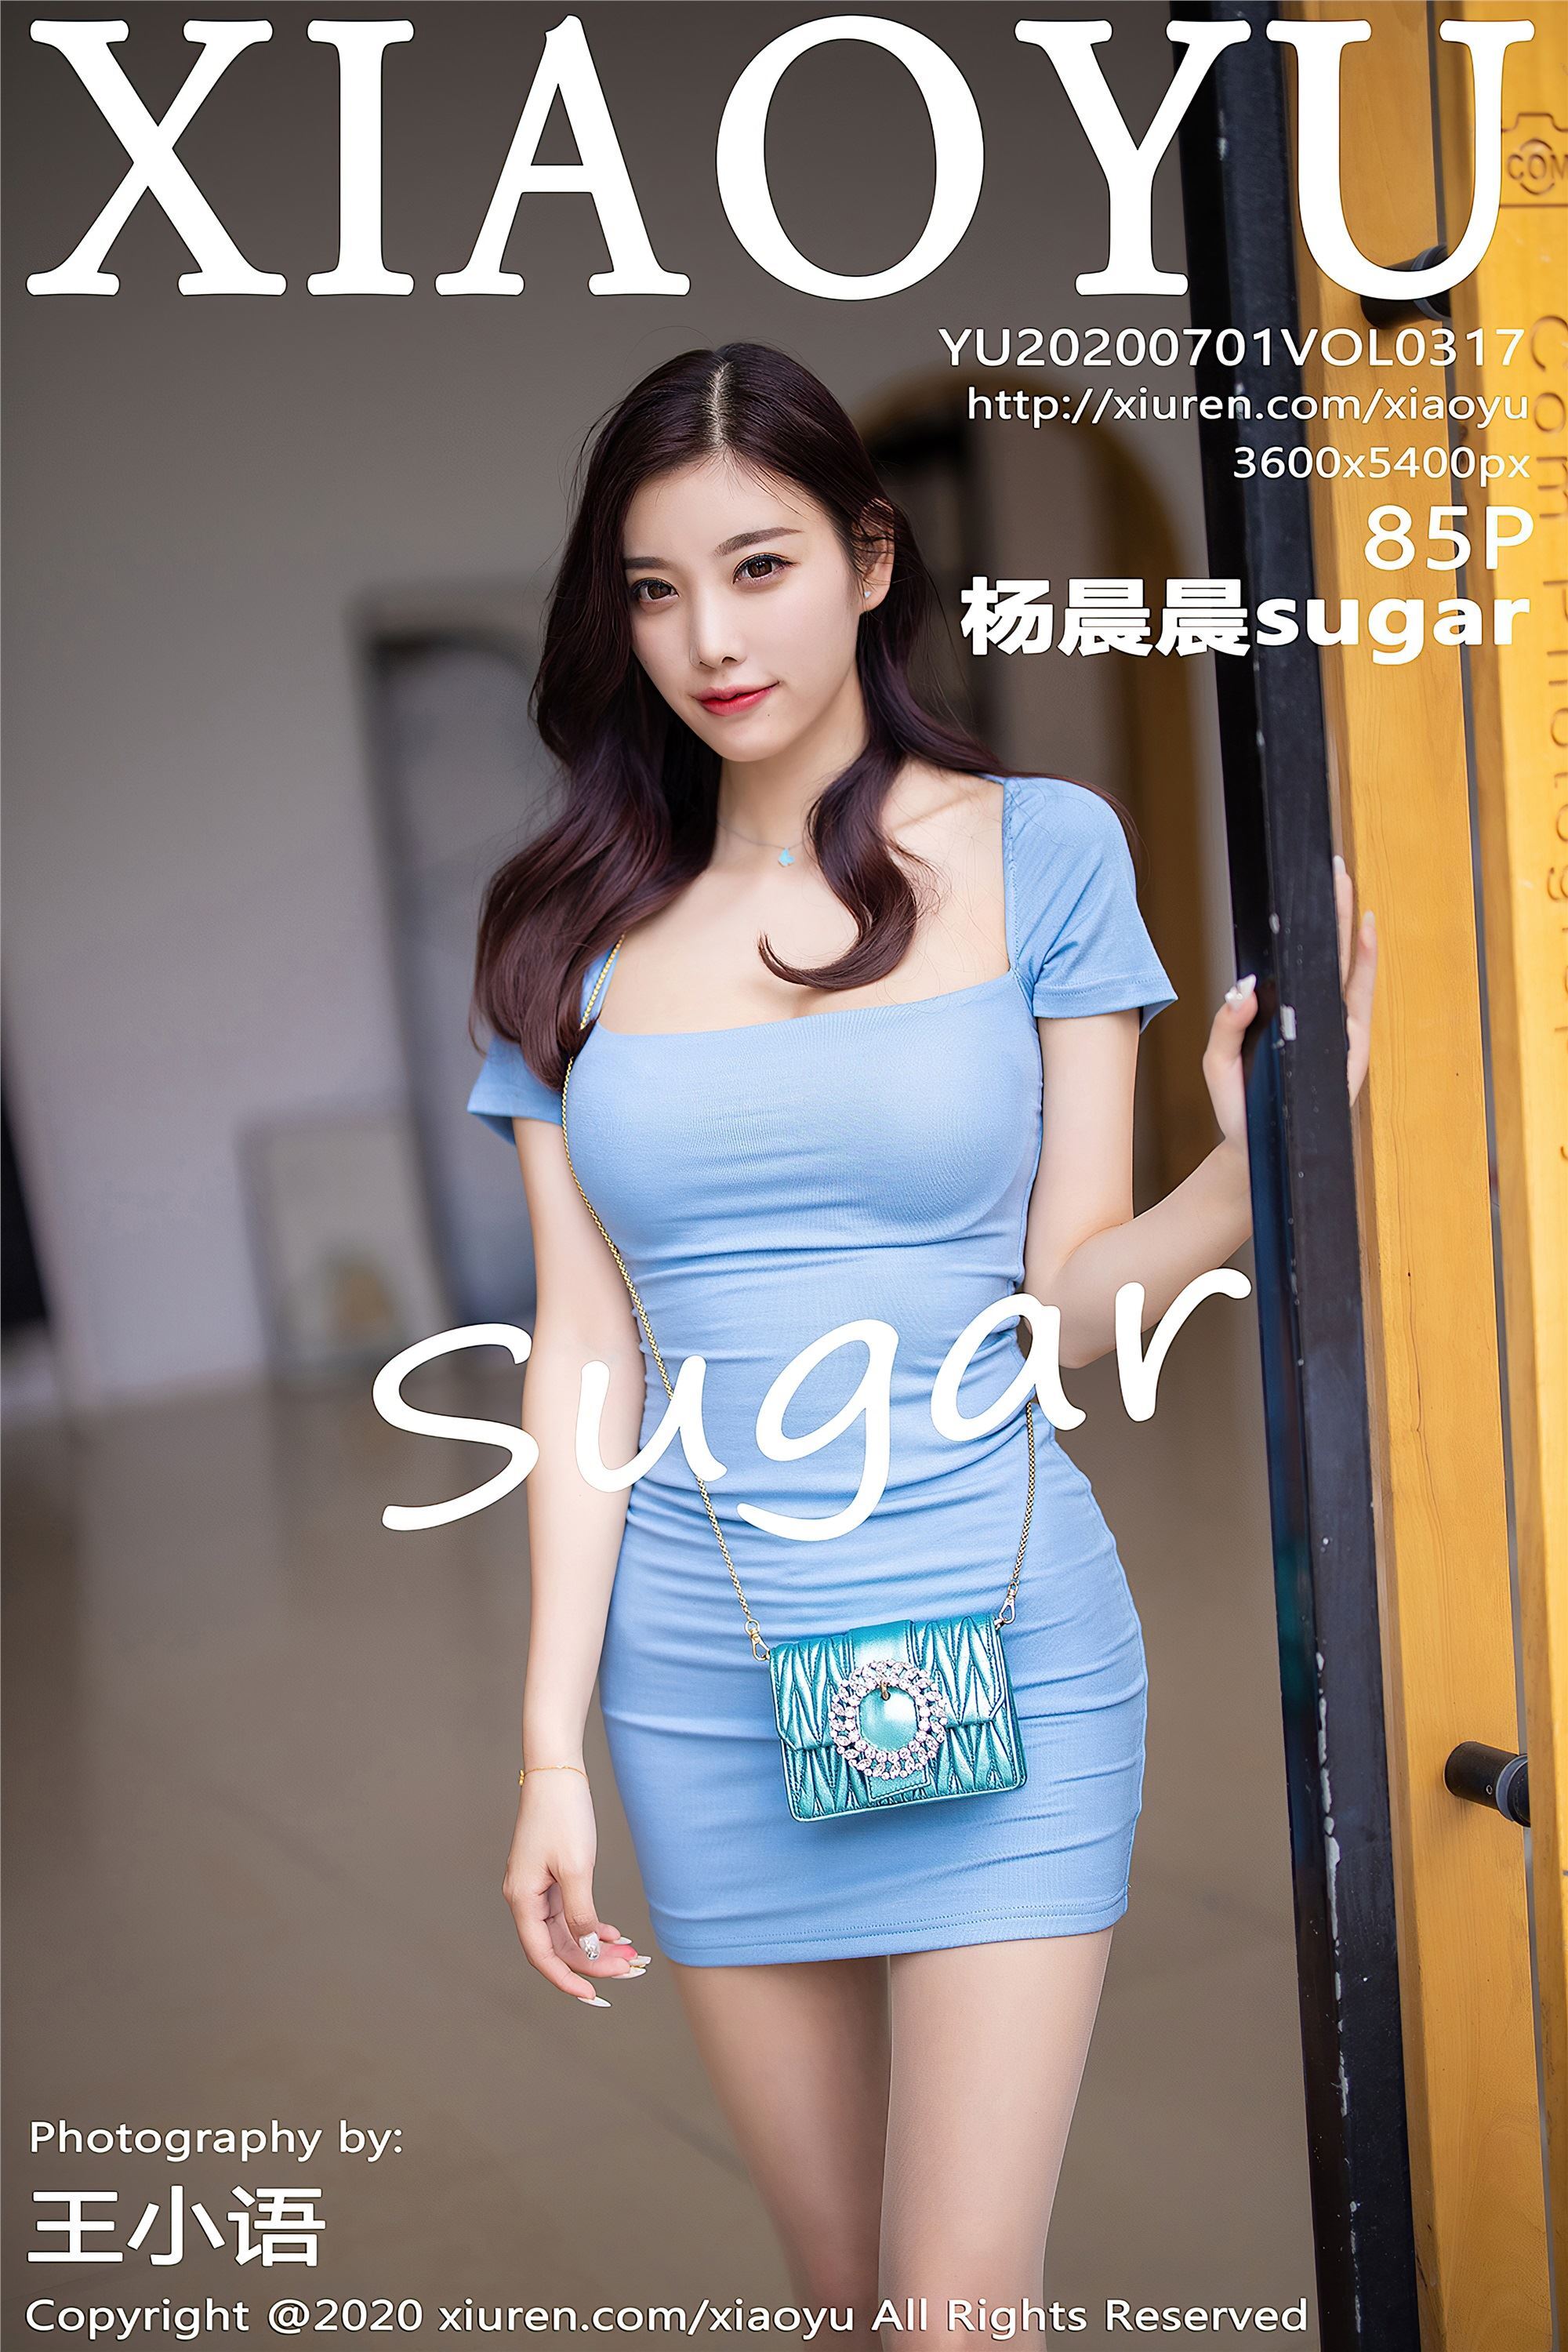 Xiaoyu language and painting world 2020-07-01 vol.317 Yang Chenchen sugar